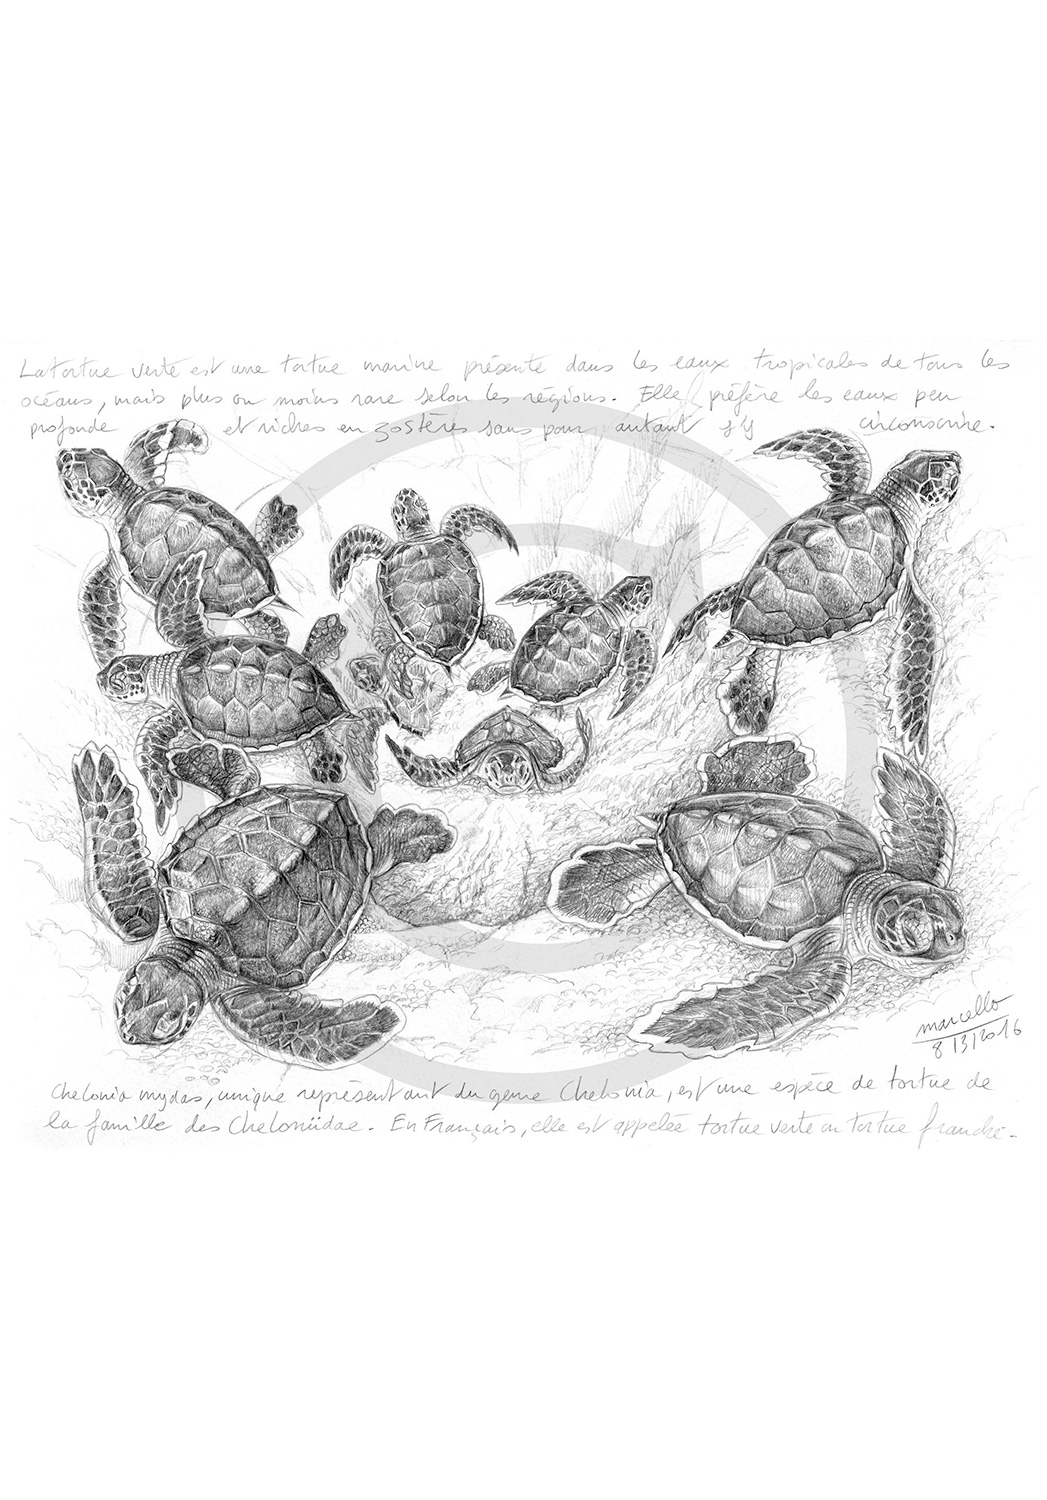 Marcello-art: Wild temperate zones 334 - Green turtles